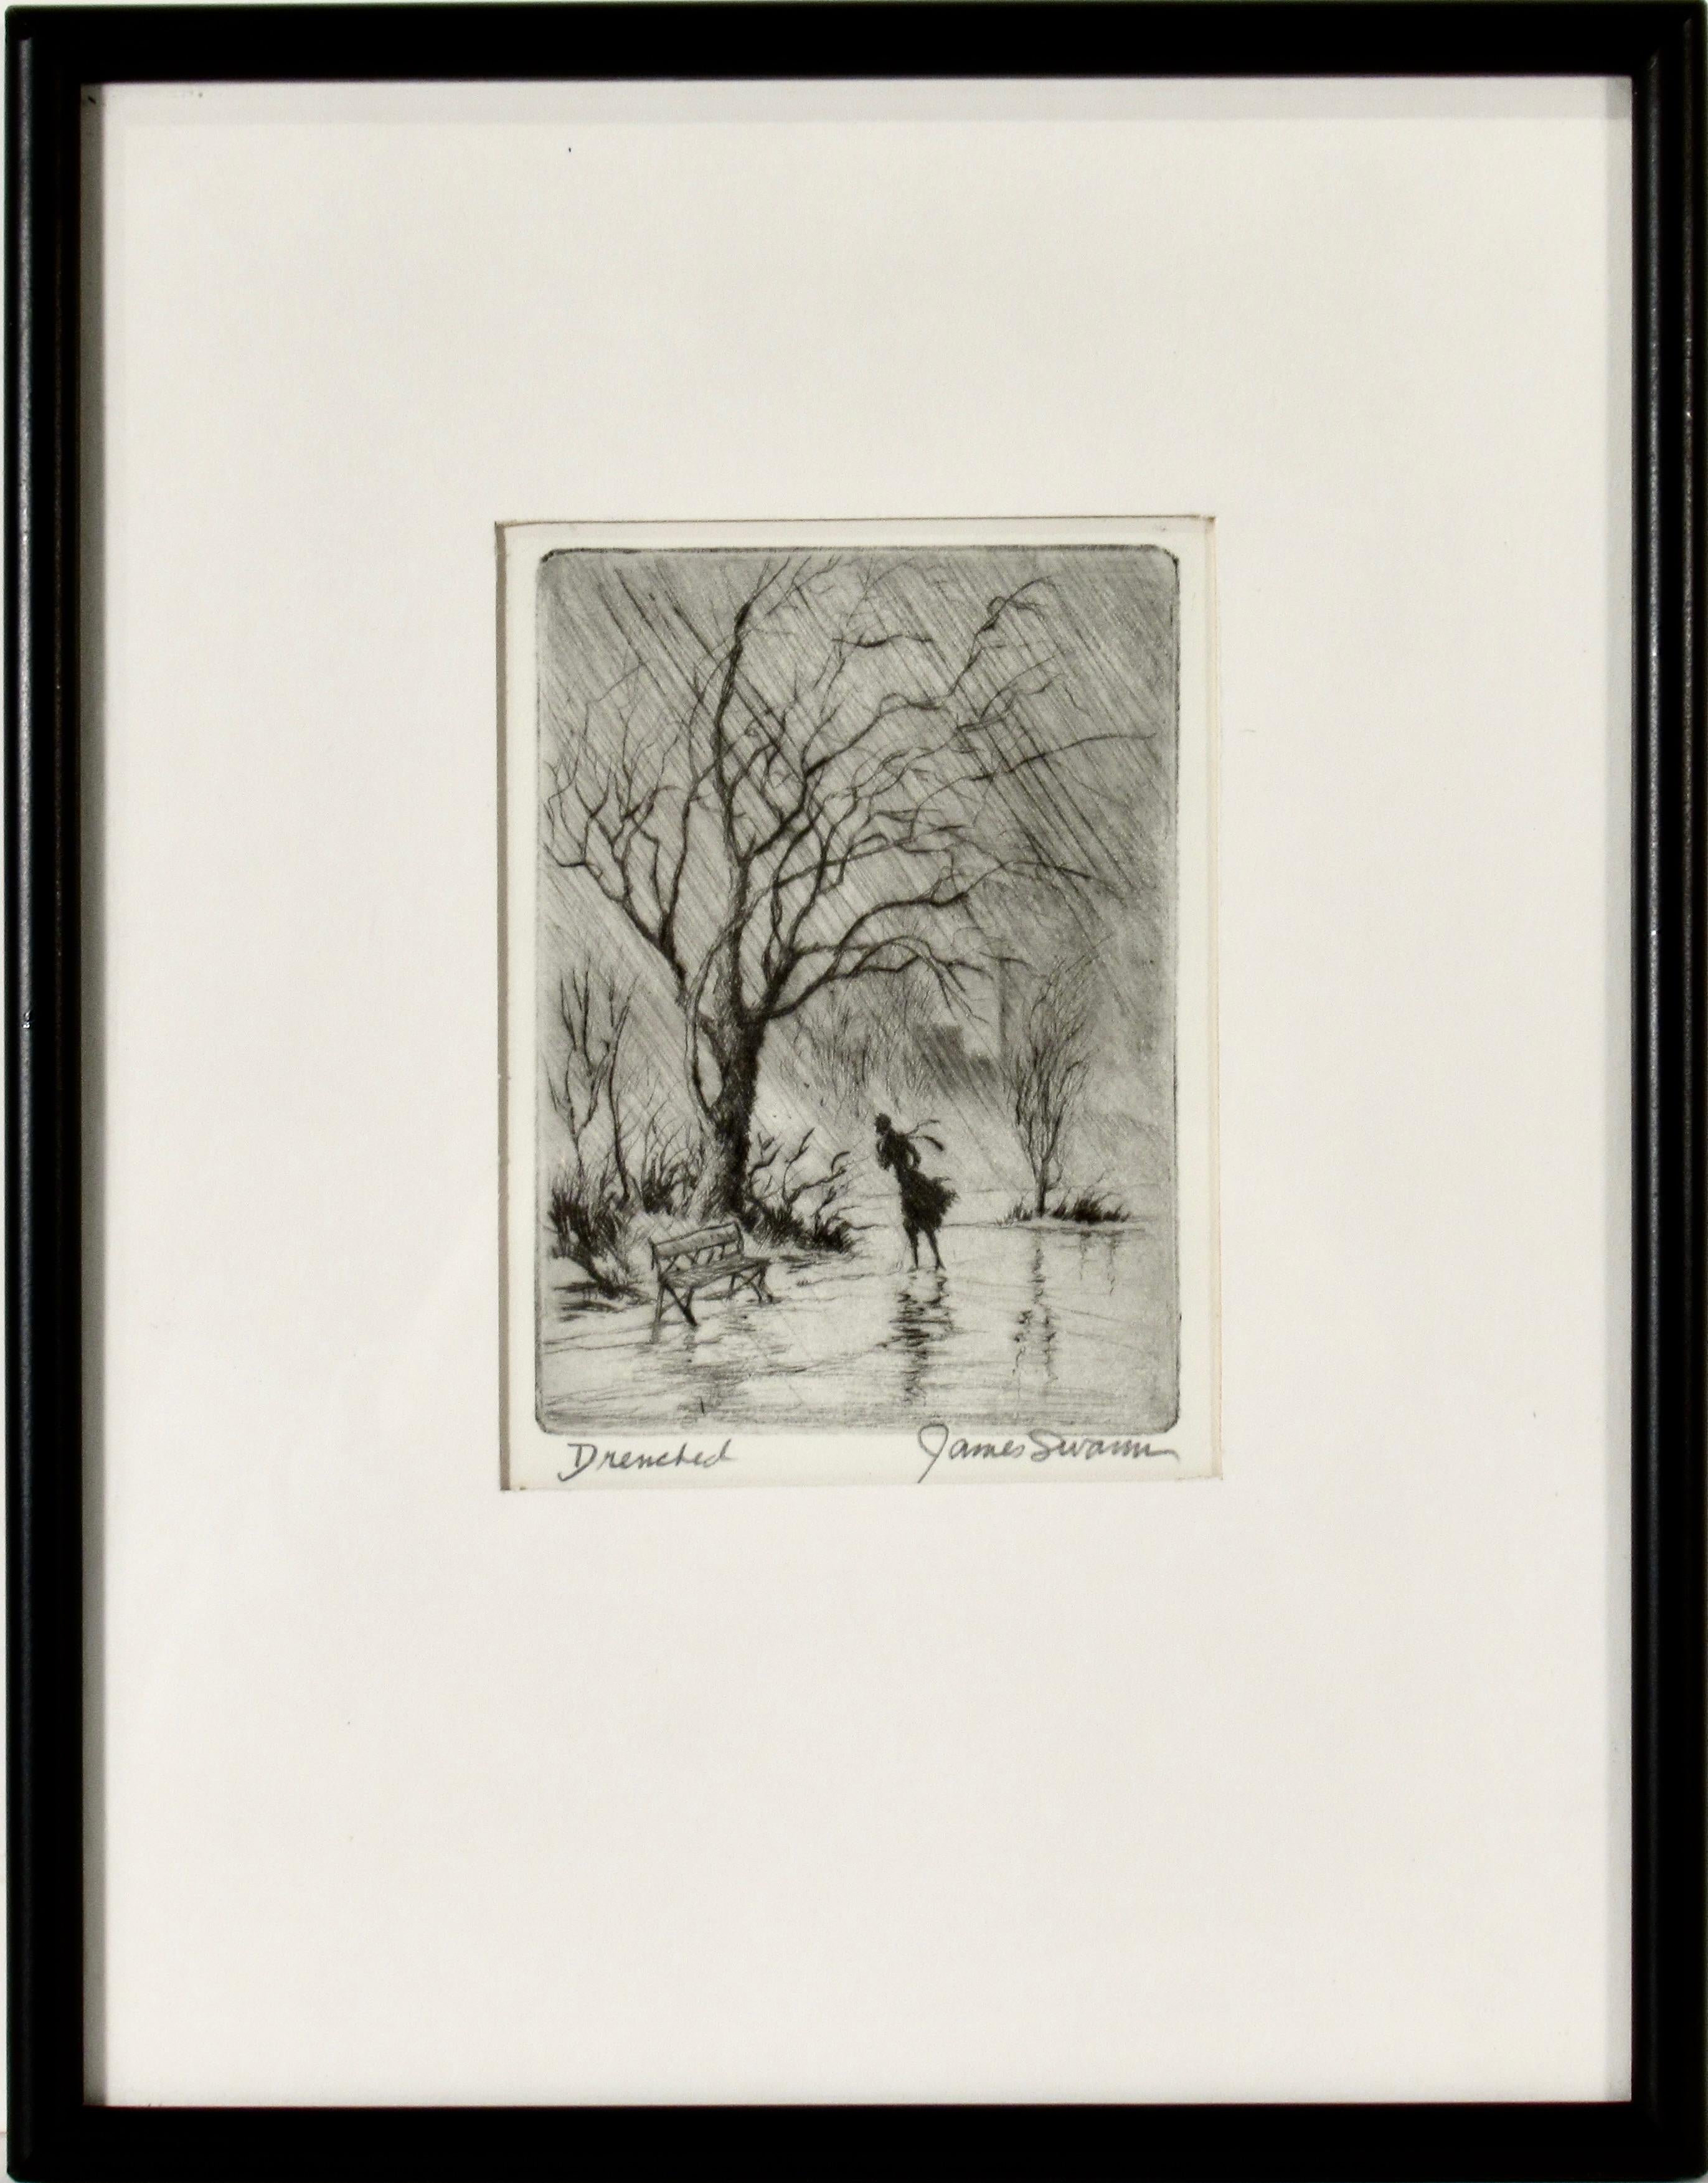 James Swann Landscape Print - Drenched (Lincoln Park, Chicago)